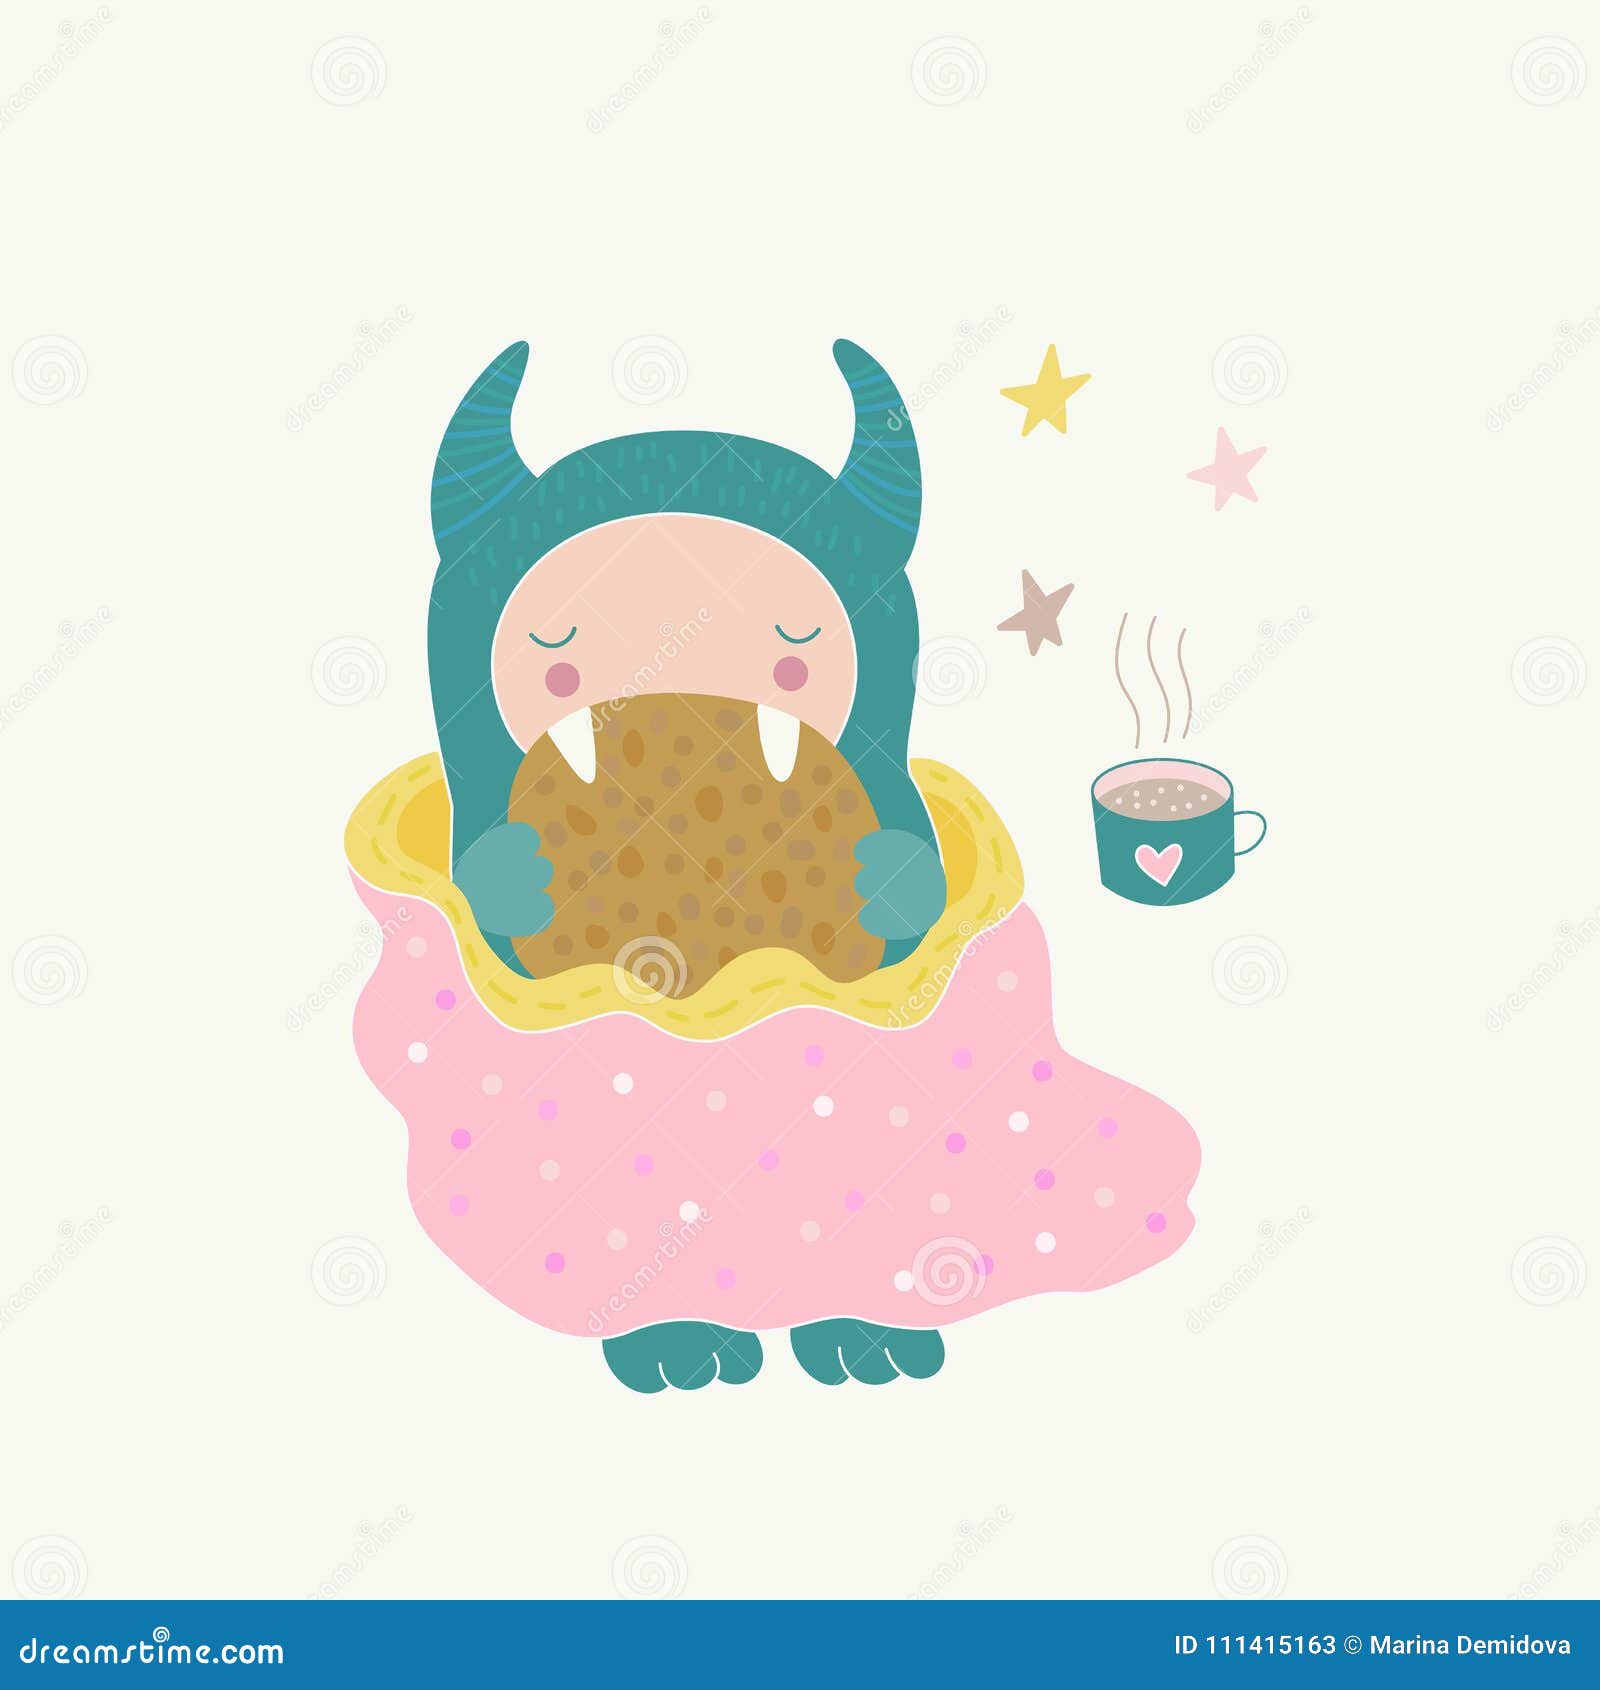 https://thumbs.dreamstime.com/z/cute-monster-eating-cookie-under-blanket-drinking-tea-funny-cartoon-character-children-s-illustration-vector-art-111415163.jpg